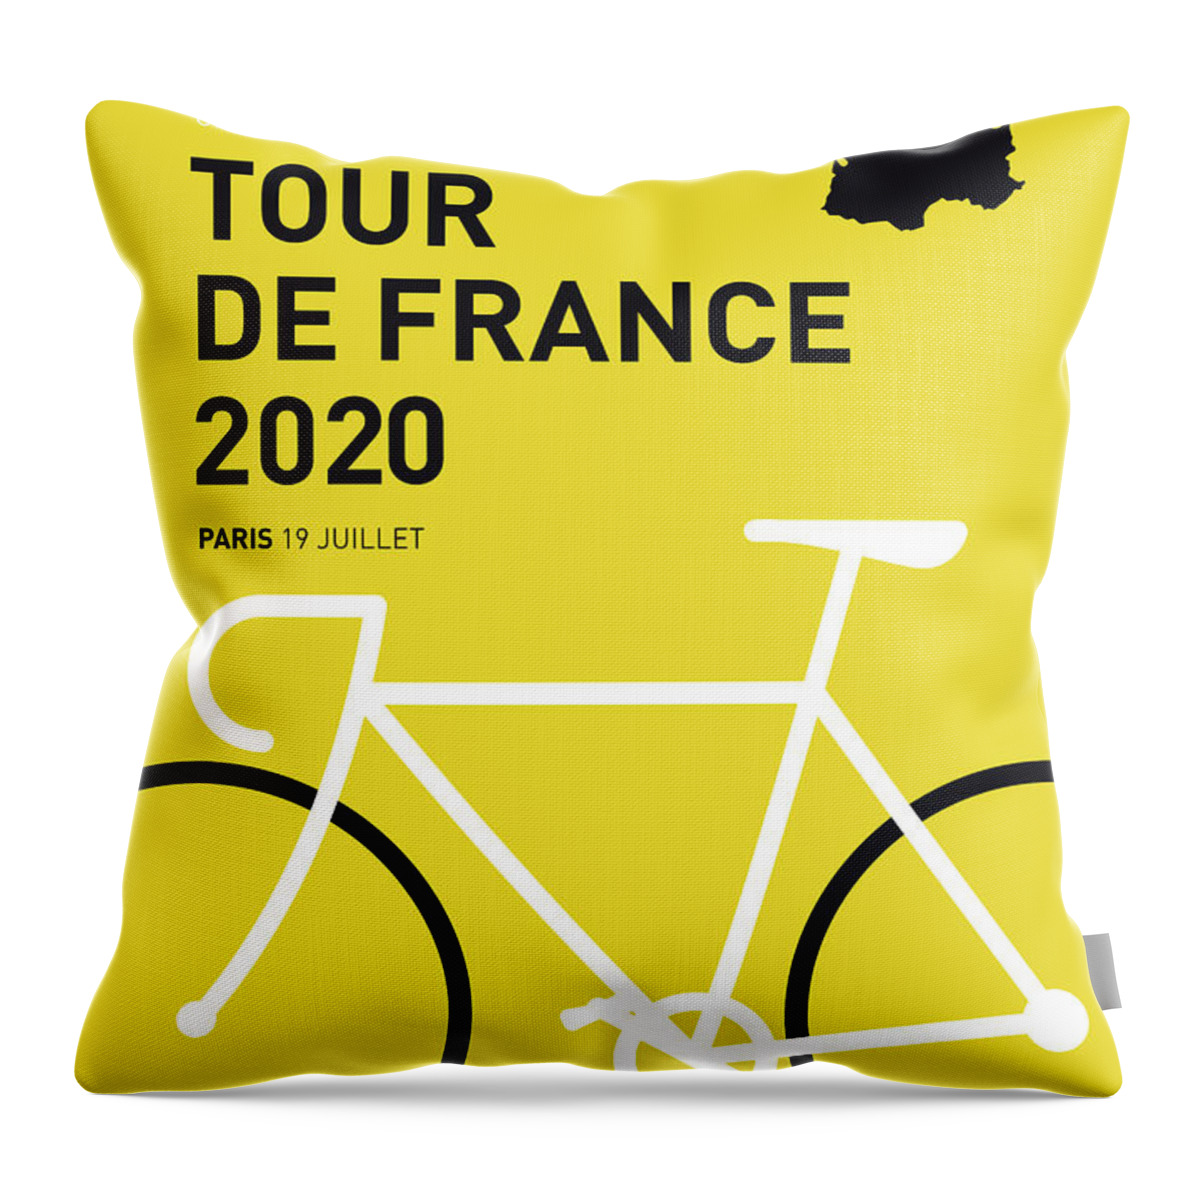 2020 Throw Pillow featuring the digital art My Tour De France Minimal Poster 2020 by Chungkong Art